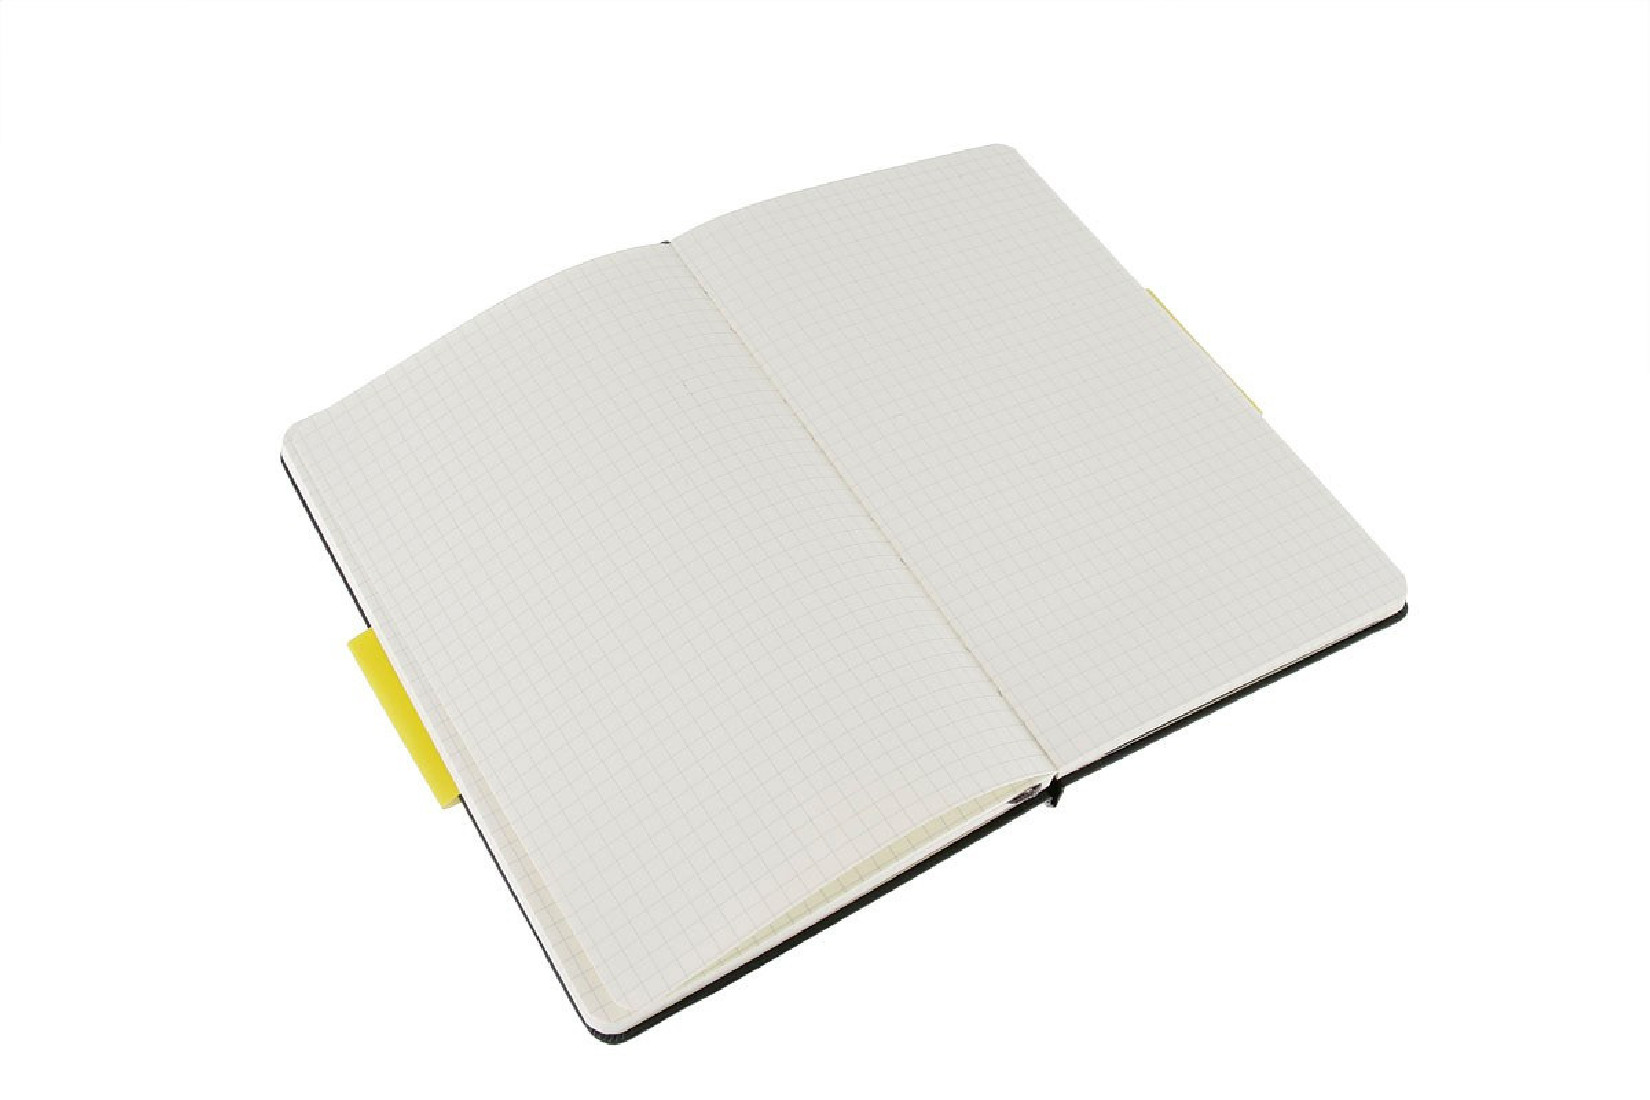 Notebook Large 13x21 Squared Black Hard Cover Moleskine